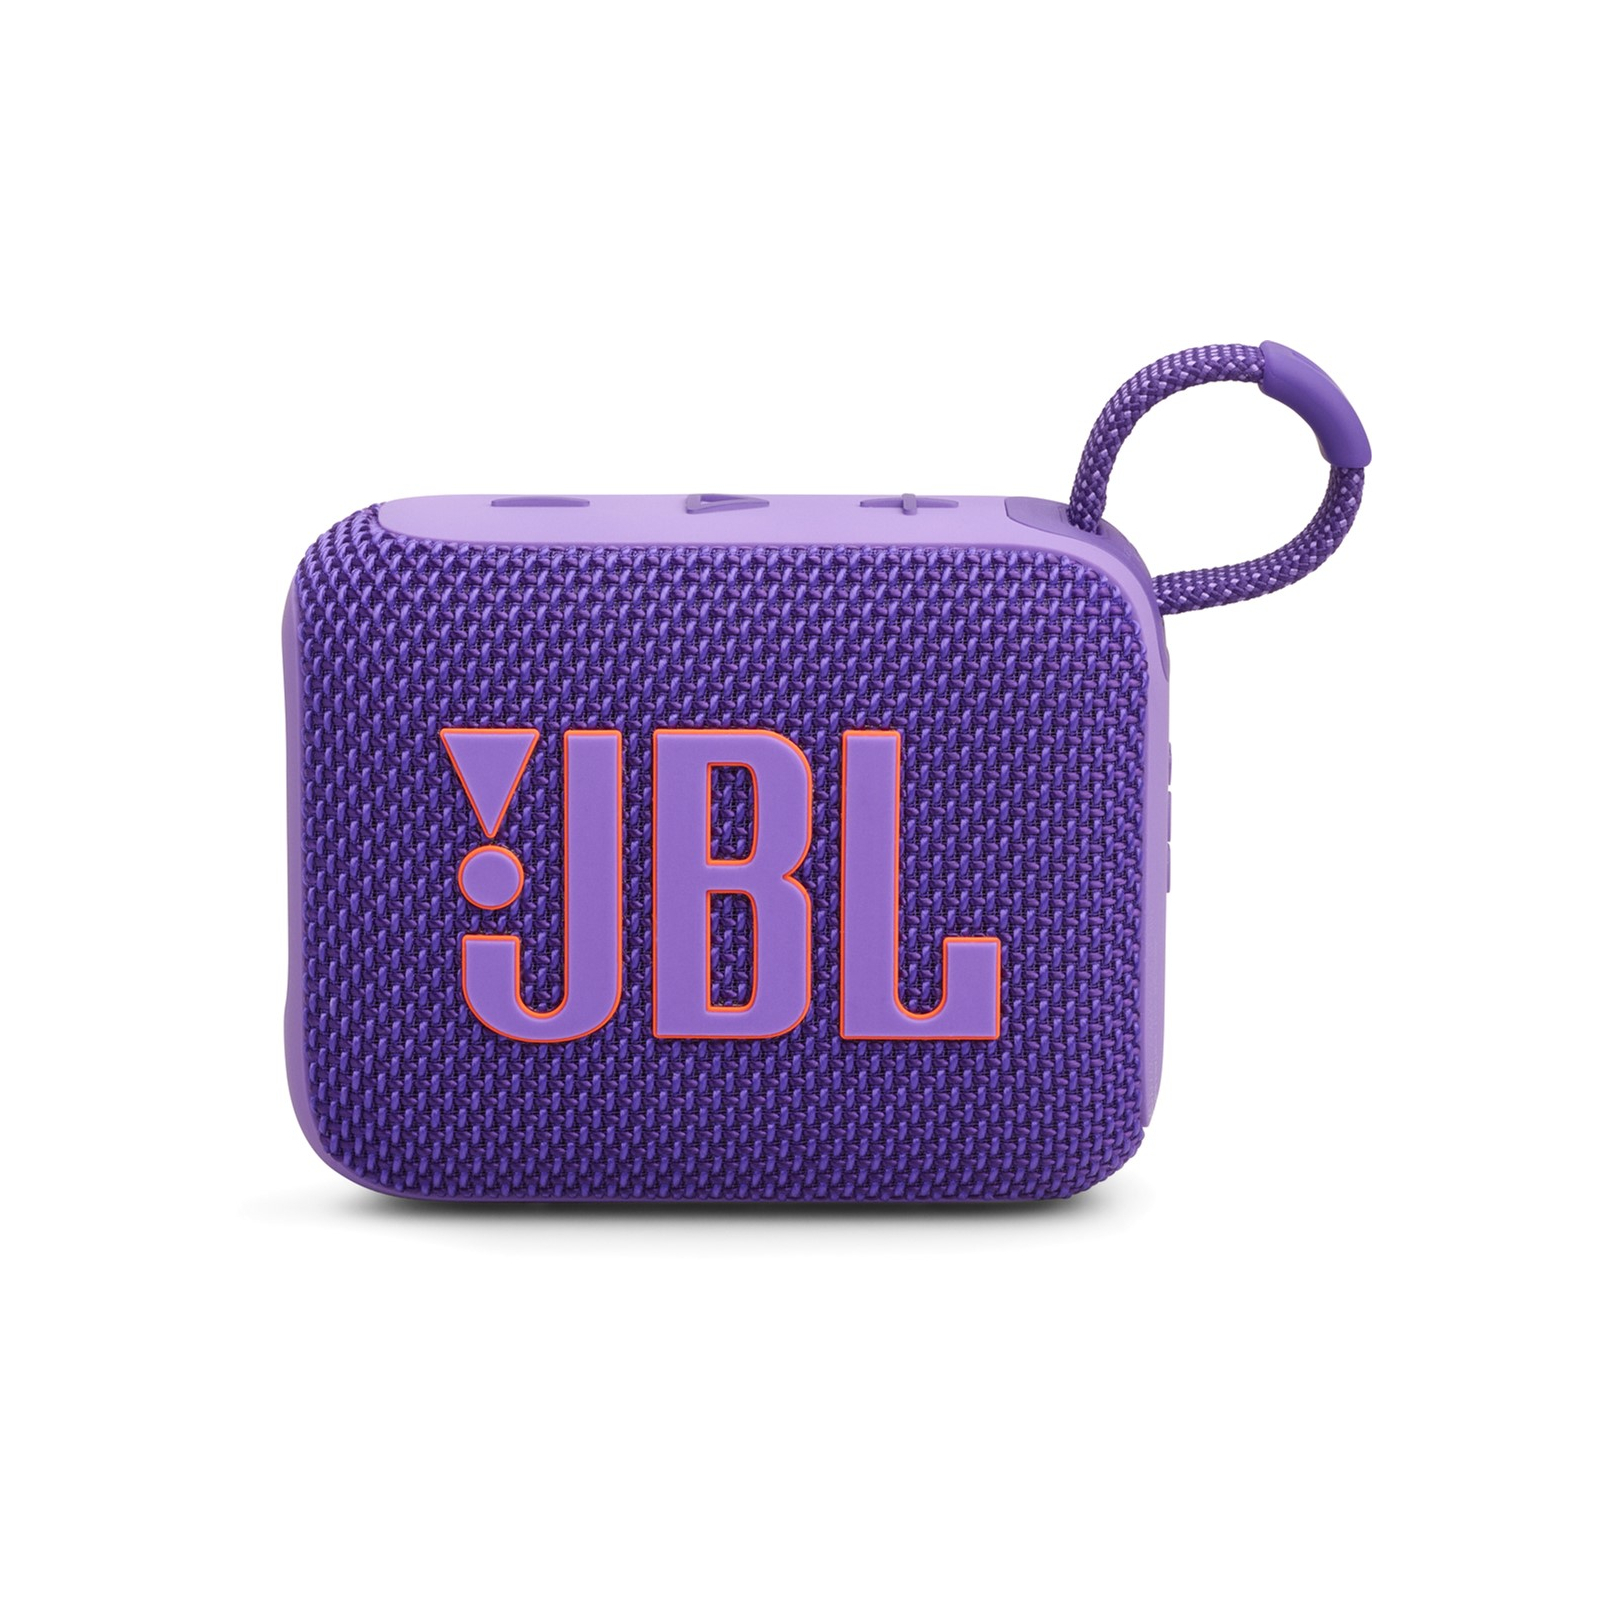 Акустична система JBL Go 4 Pink (JBLGO4PINK) зображення 3